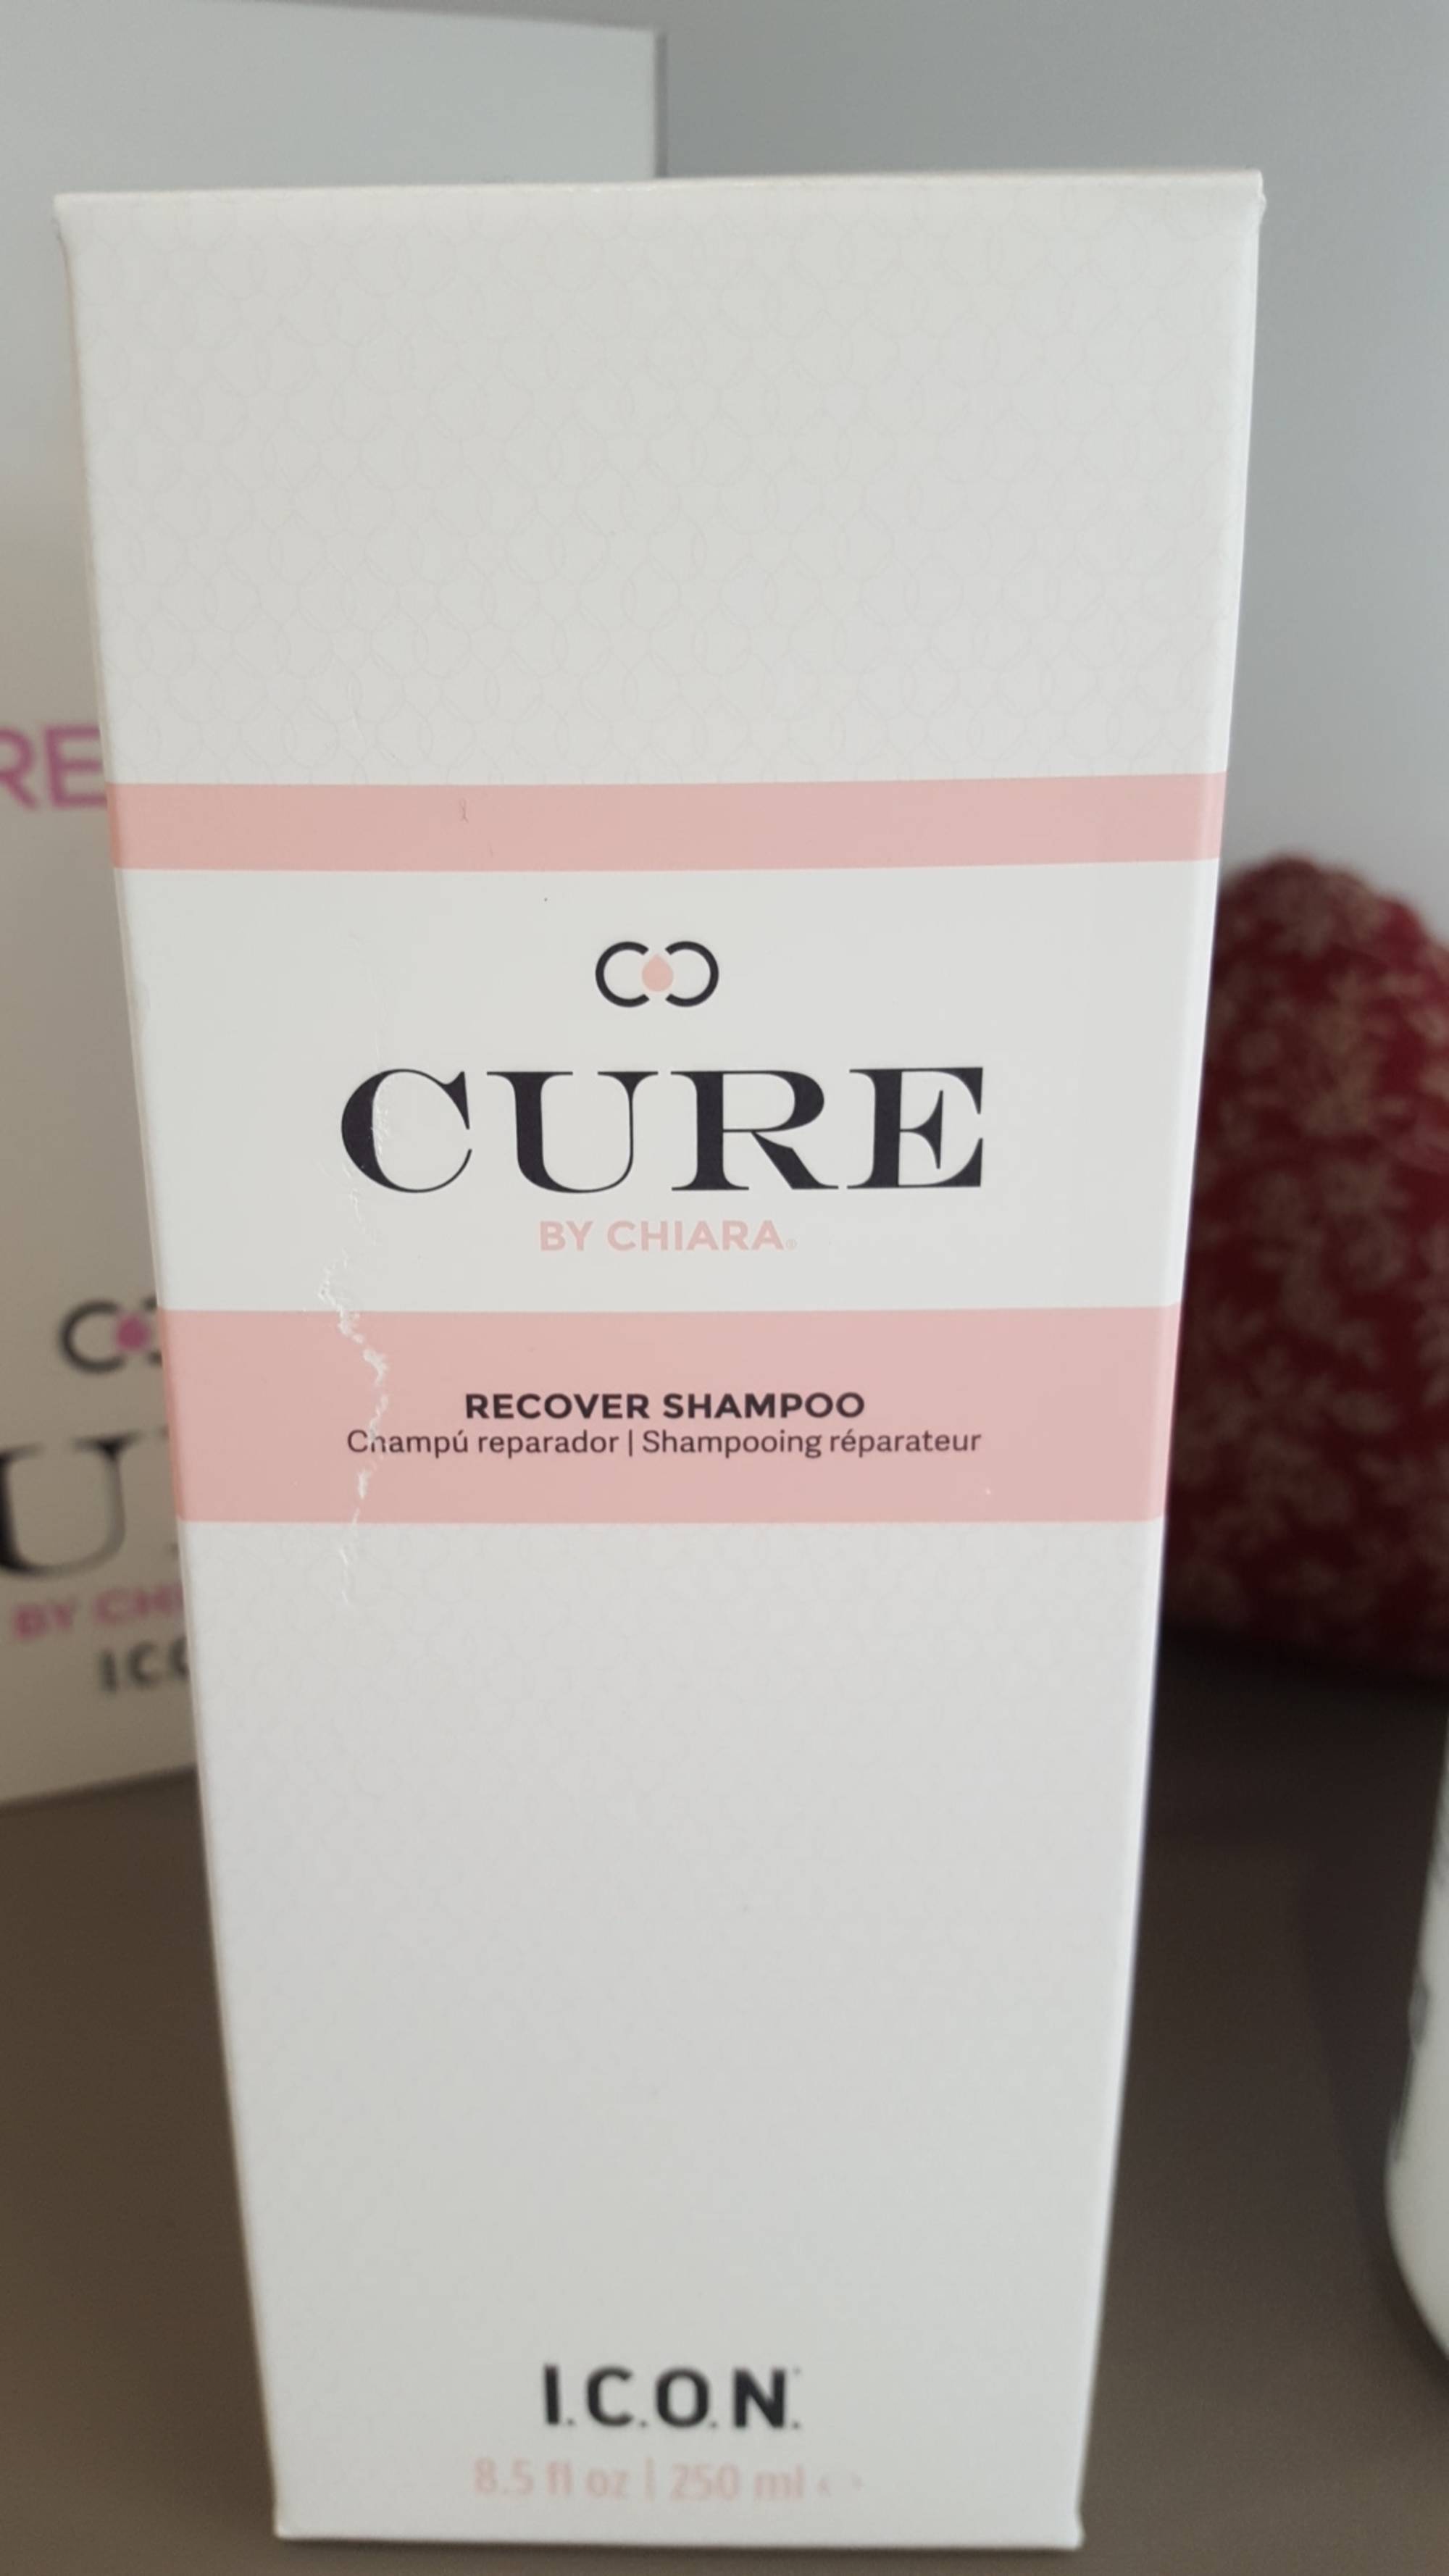 I.C.O.N. - Cure by Chiara - Recover shampoo